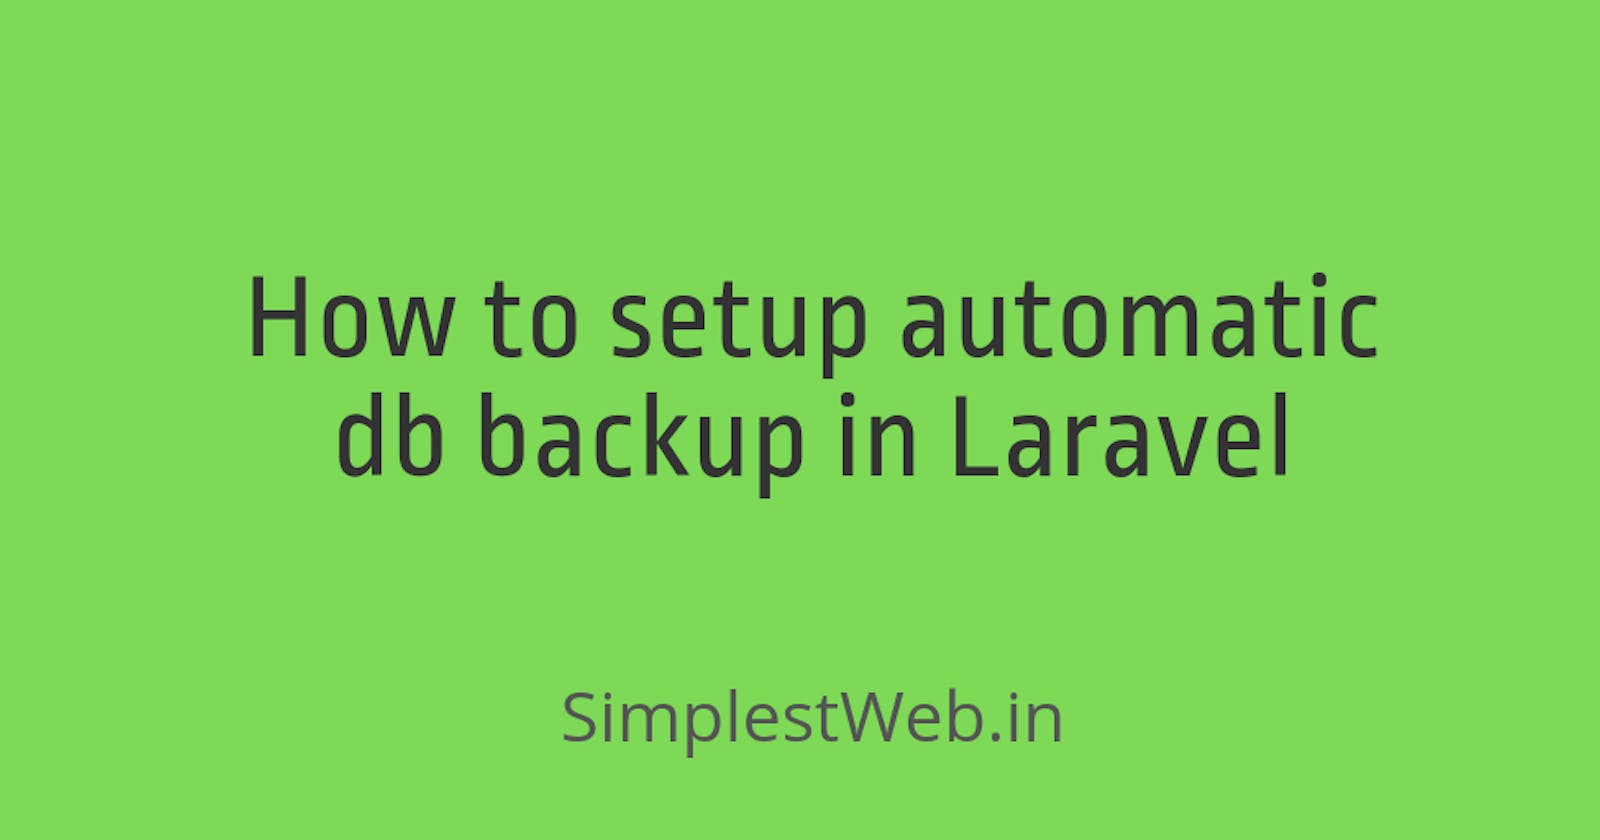 How to setup automatic db backup in Laravel